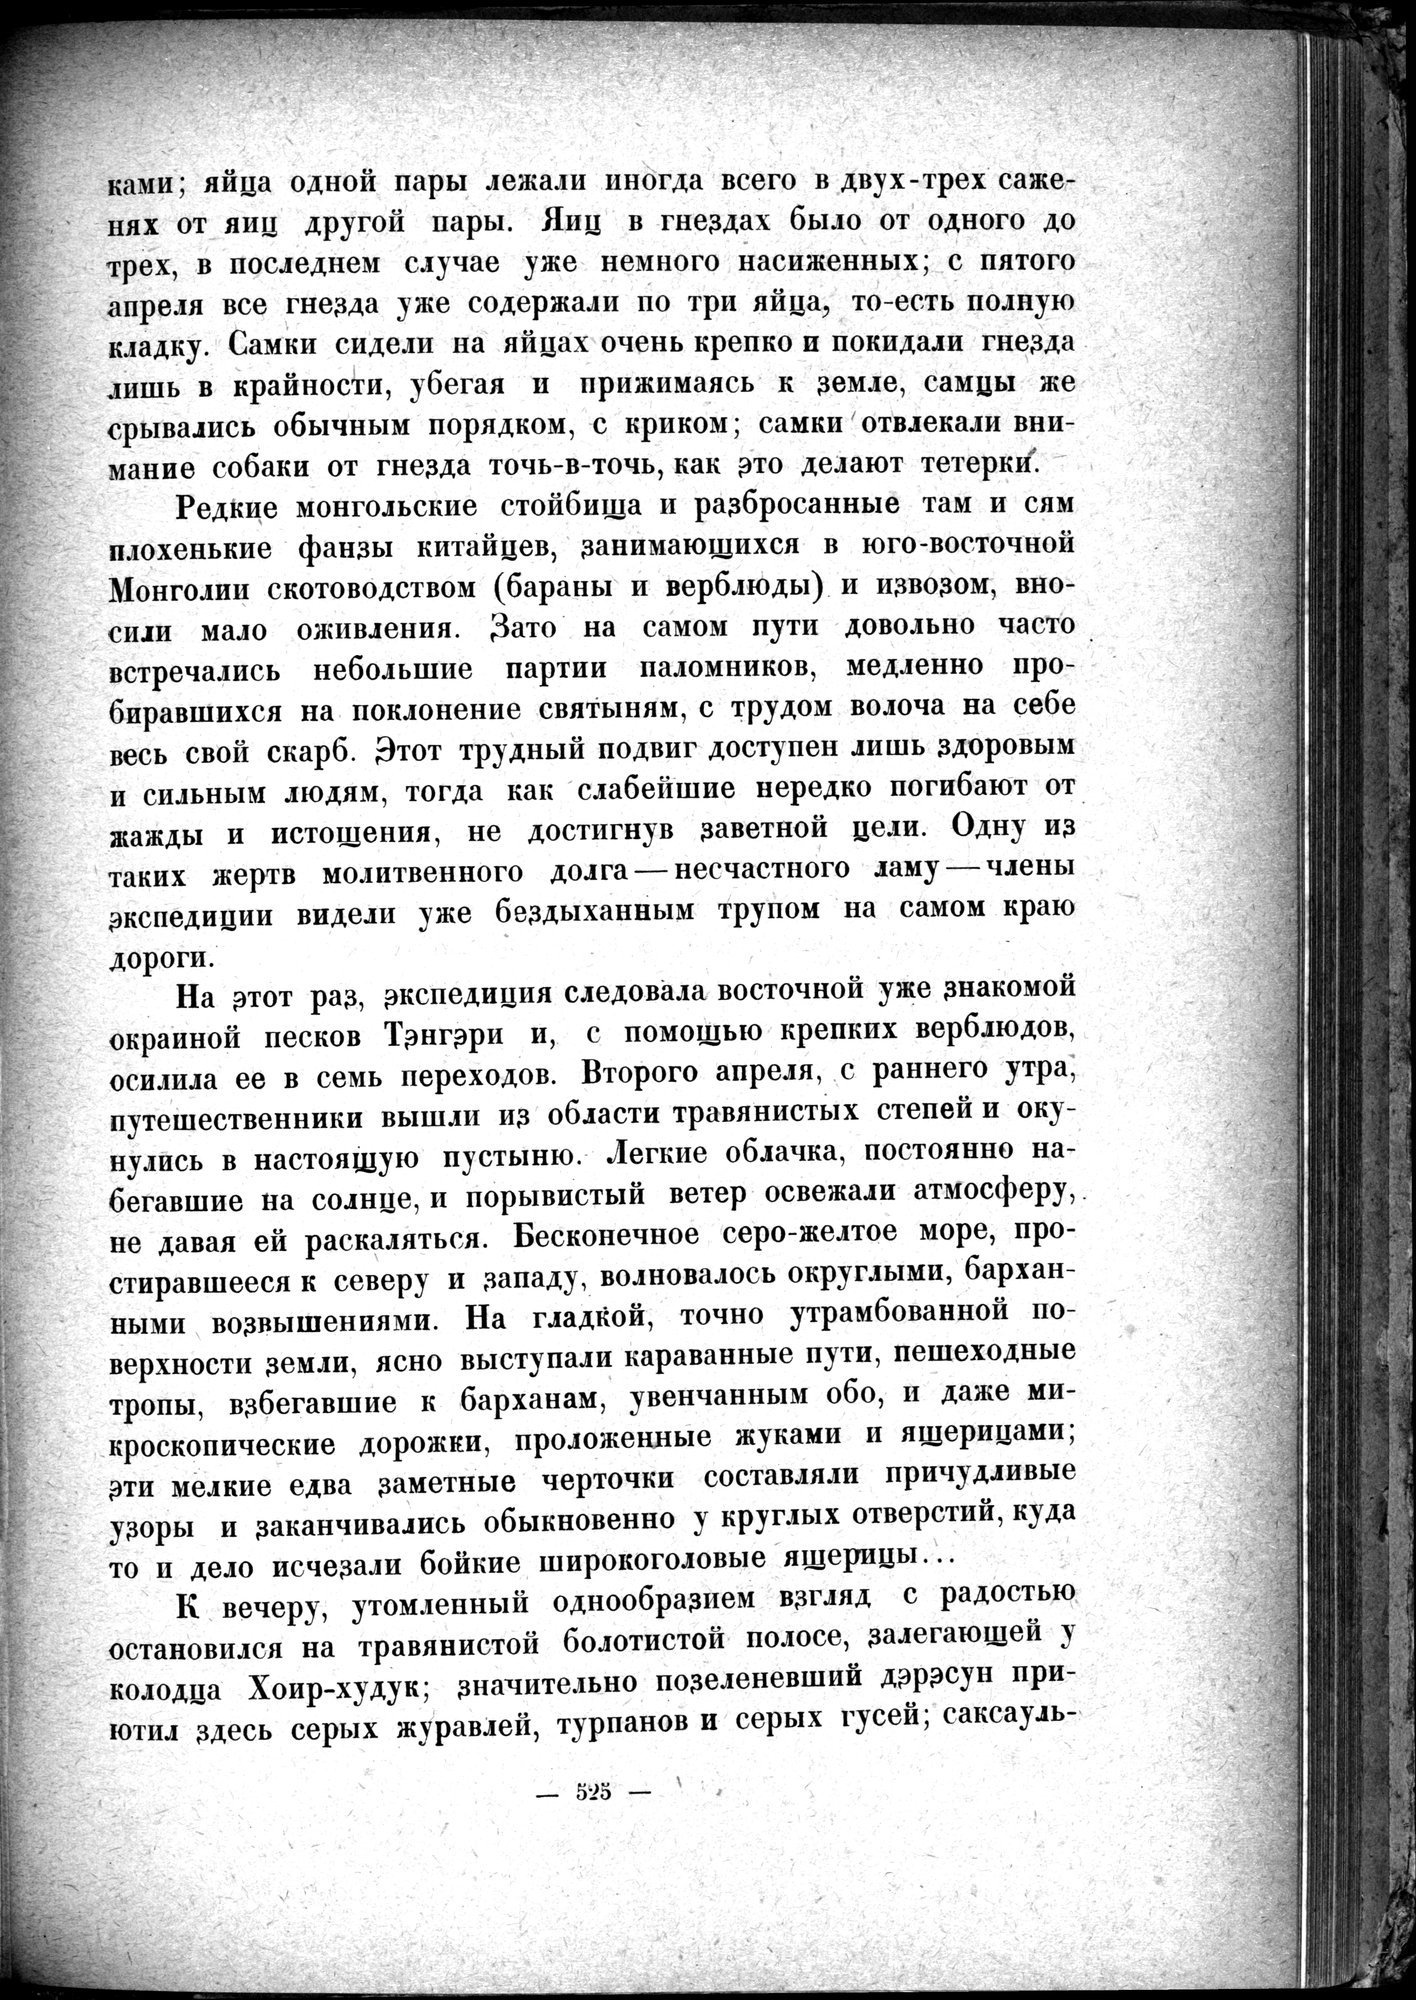 Mongoliya i Amdo i mertby gorod Khara-Khoto : vol.1 / Page 609 (Grayscale High Resolution Image)